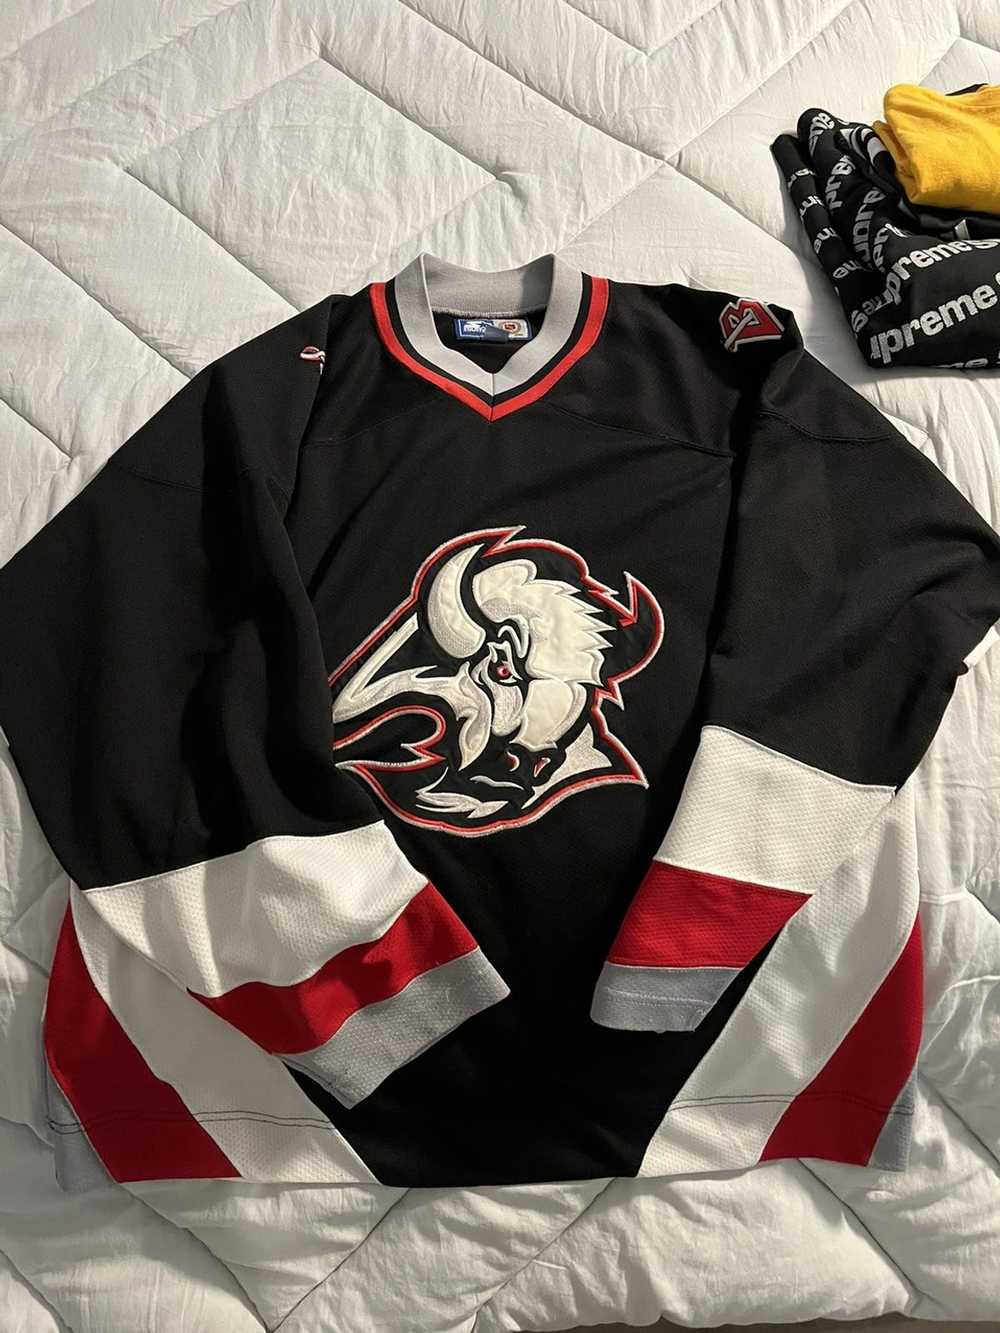 Buffalo Sabres Goat Jersey - Red Starter Fashion Jersey Large (Reverse  Retro)